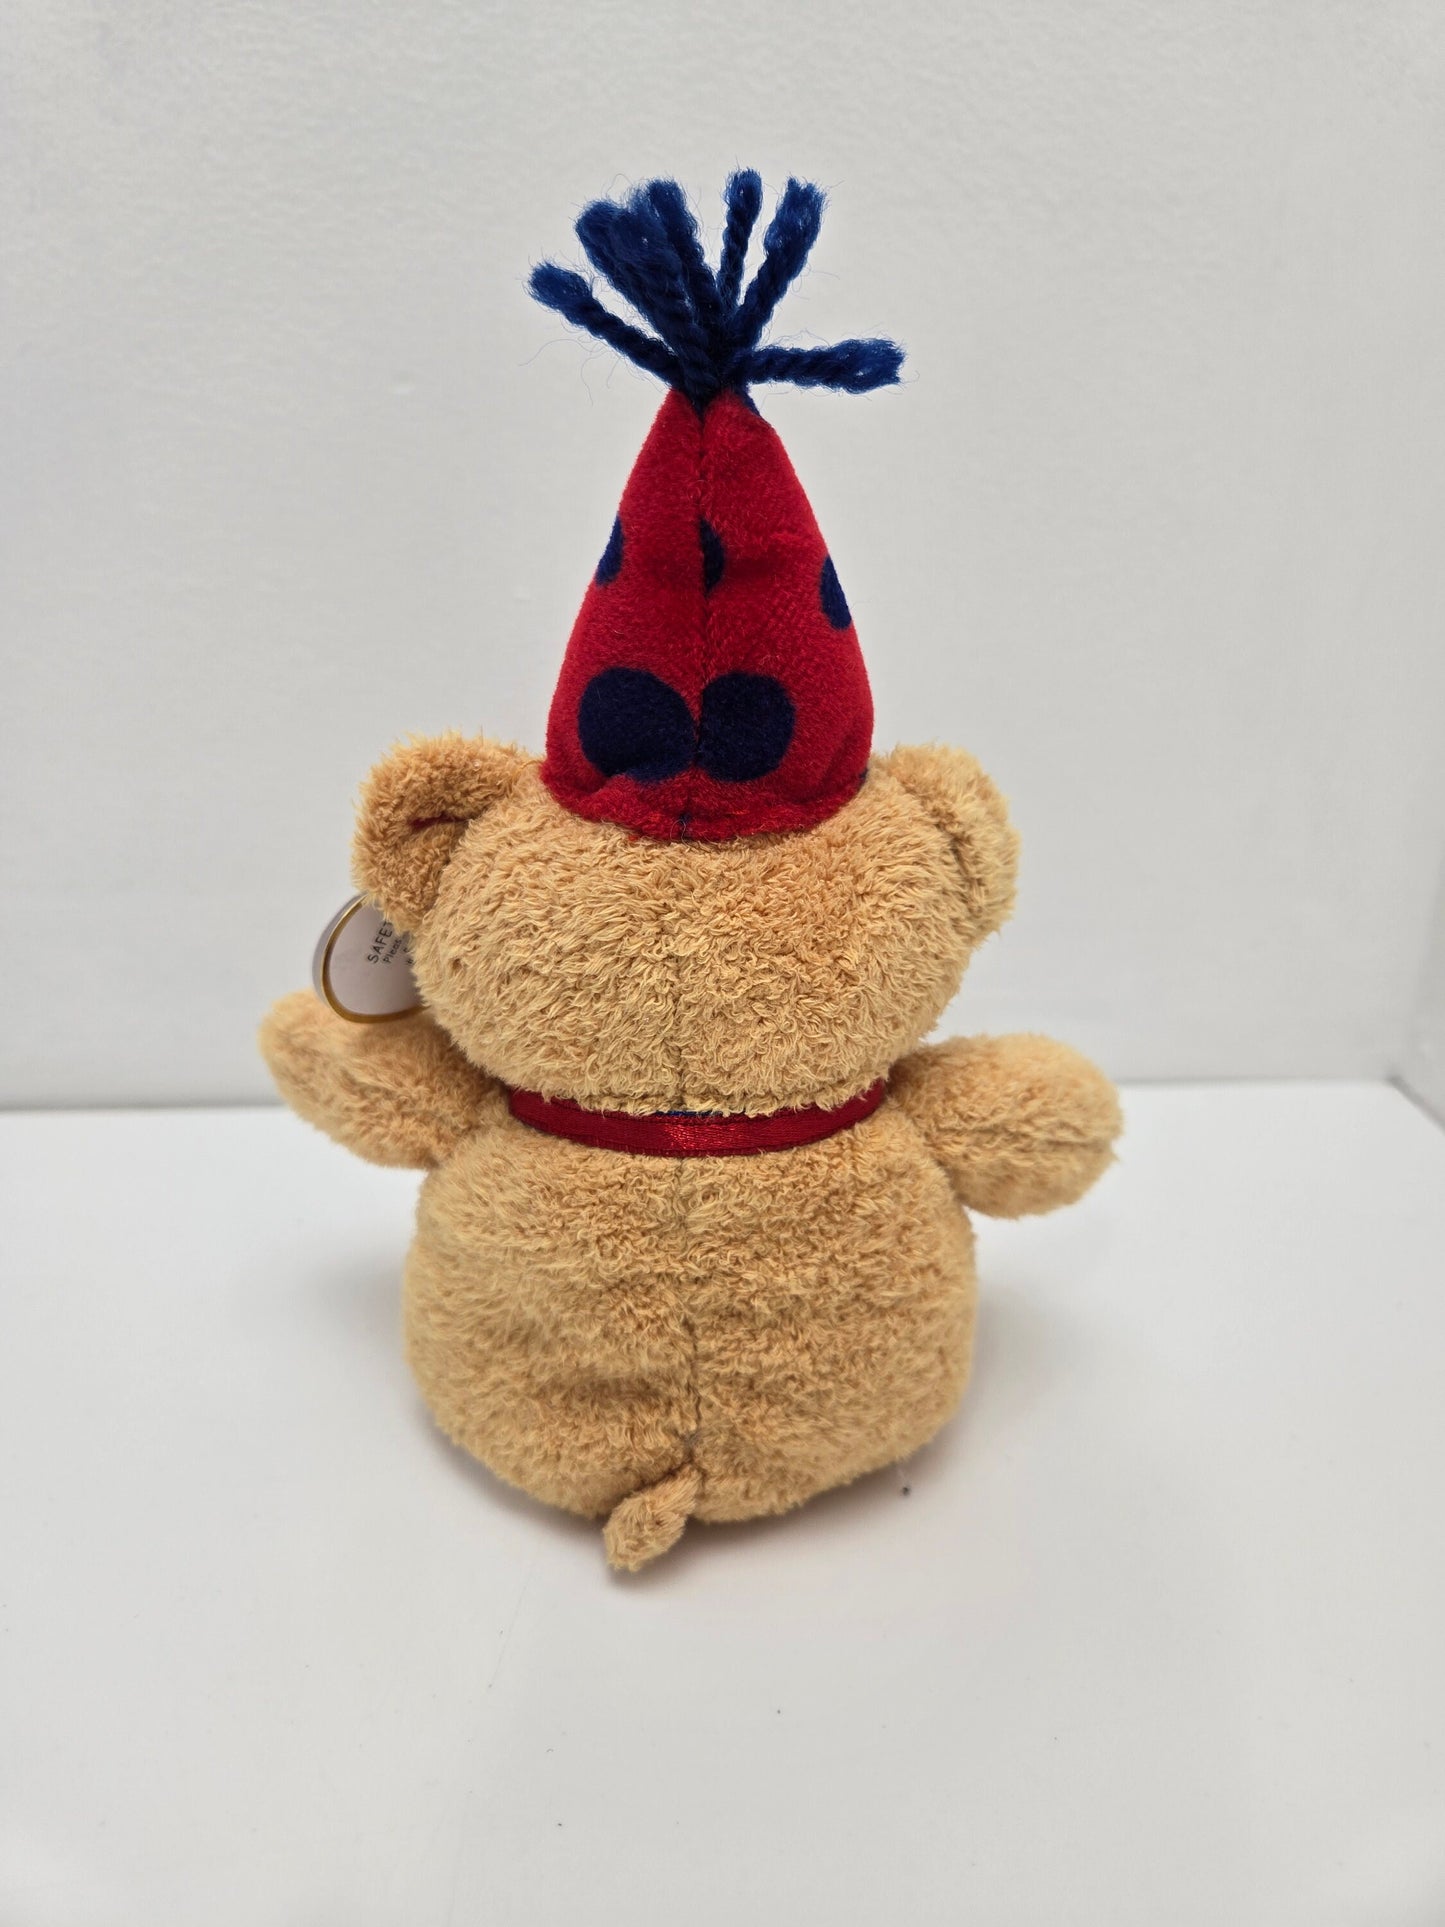 Ty Beanie Baby “Fun” the Birthday Bear (5.5 inch)